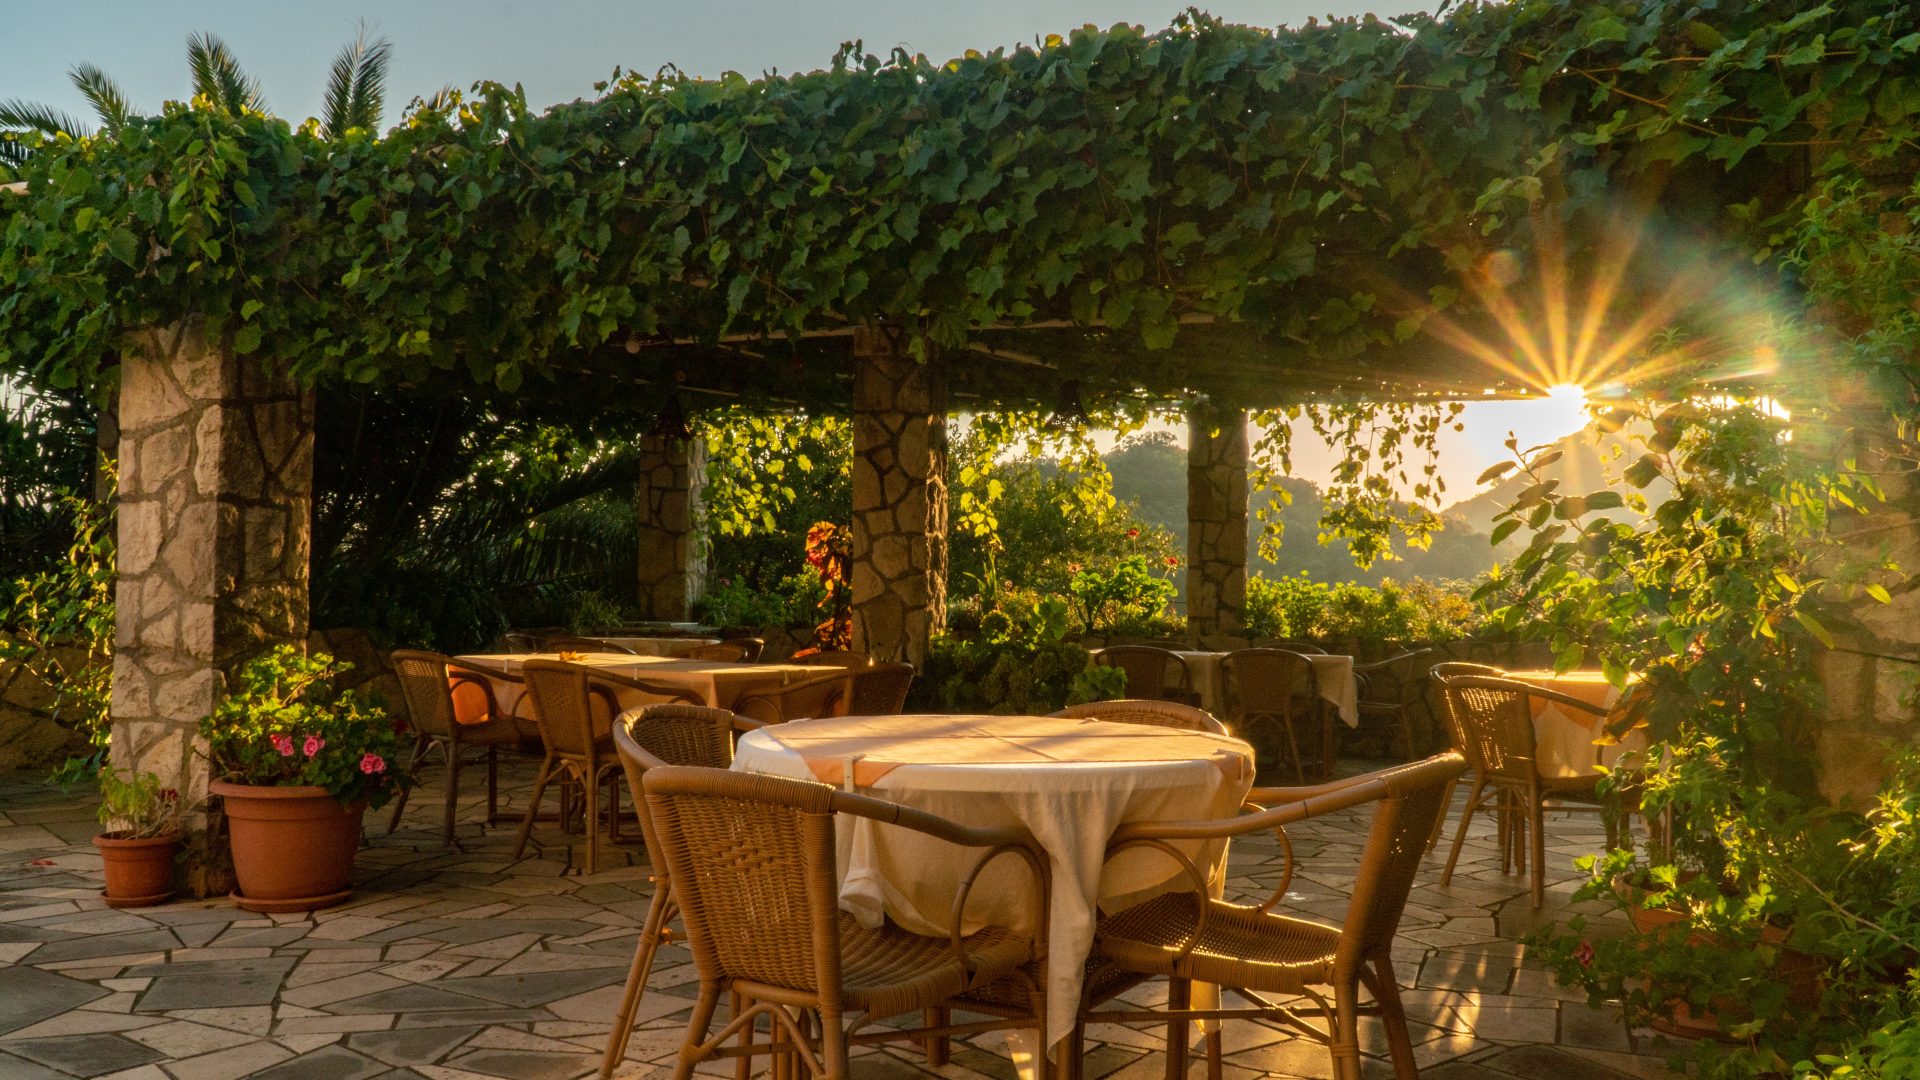 Italian style outdoor eating area